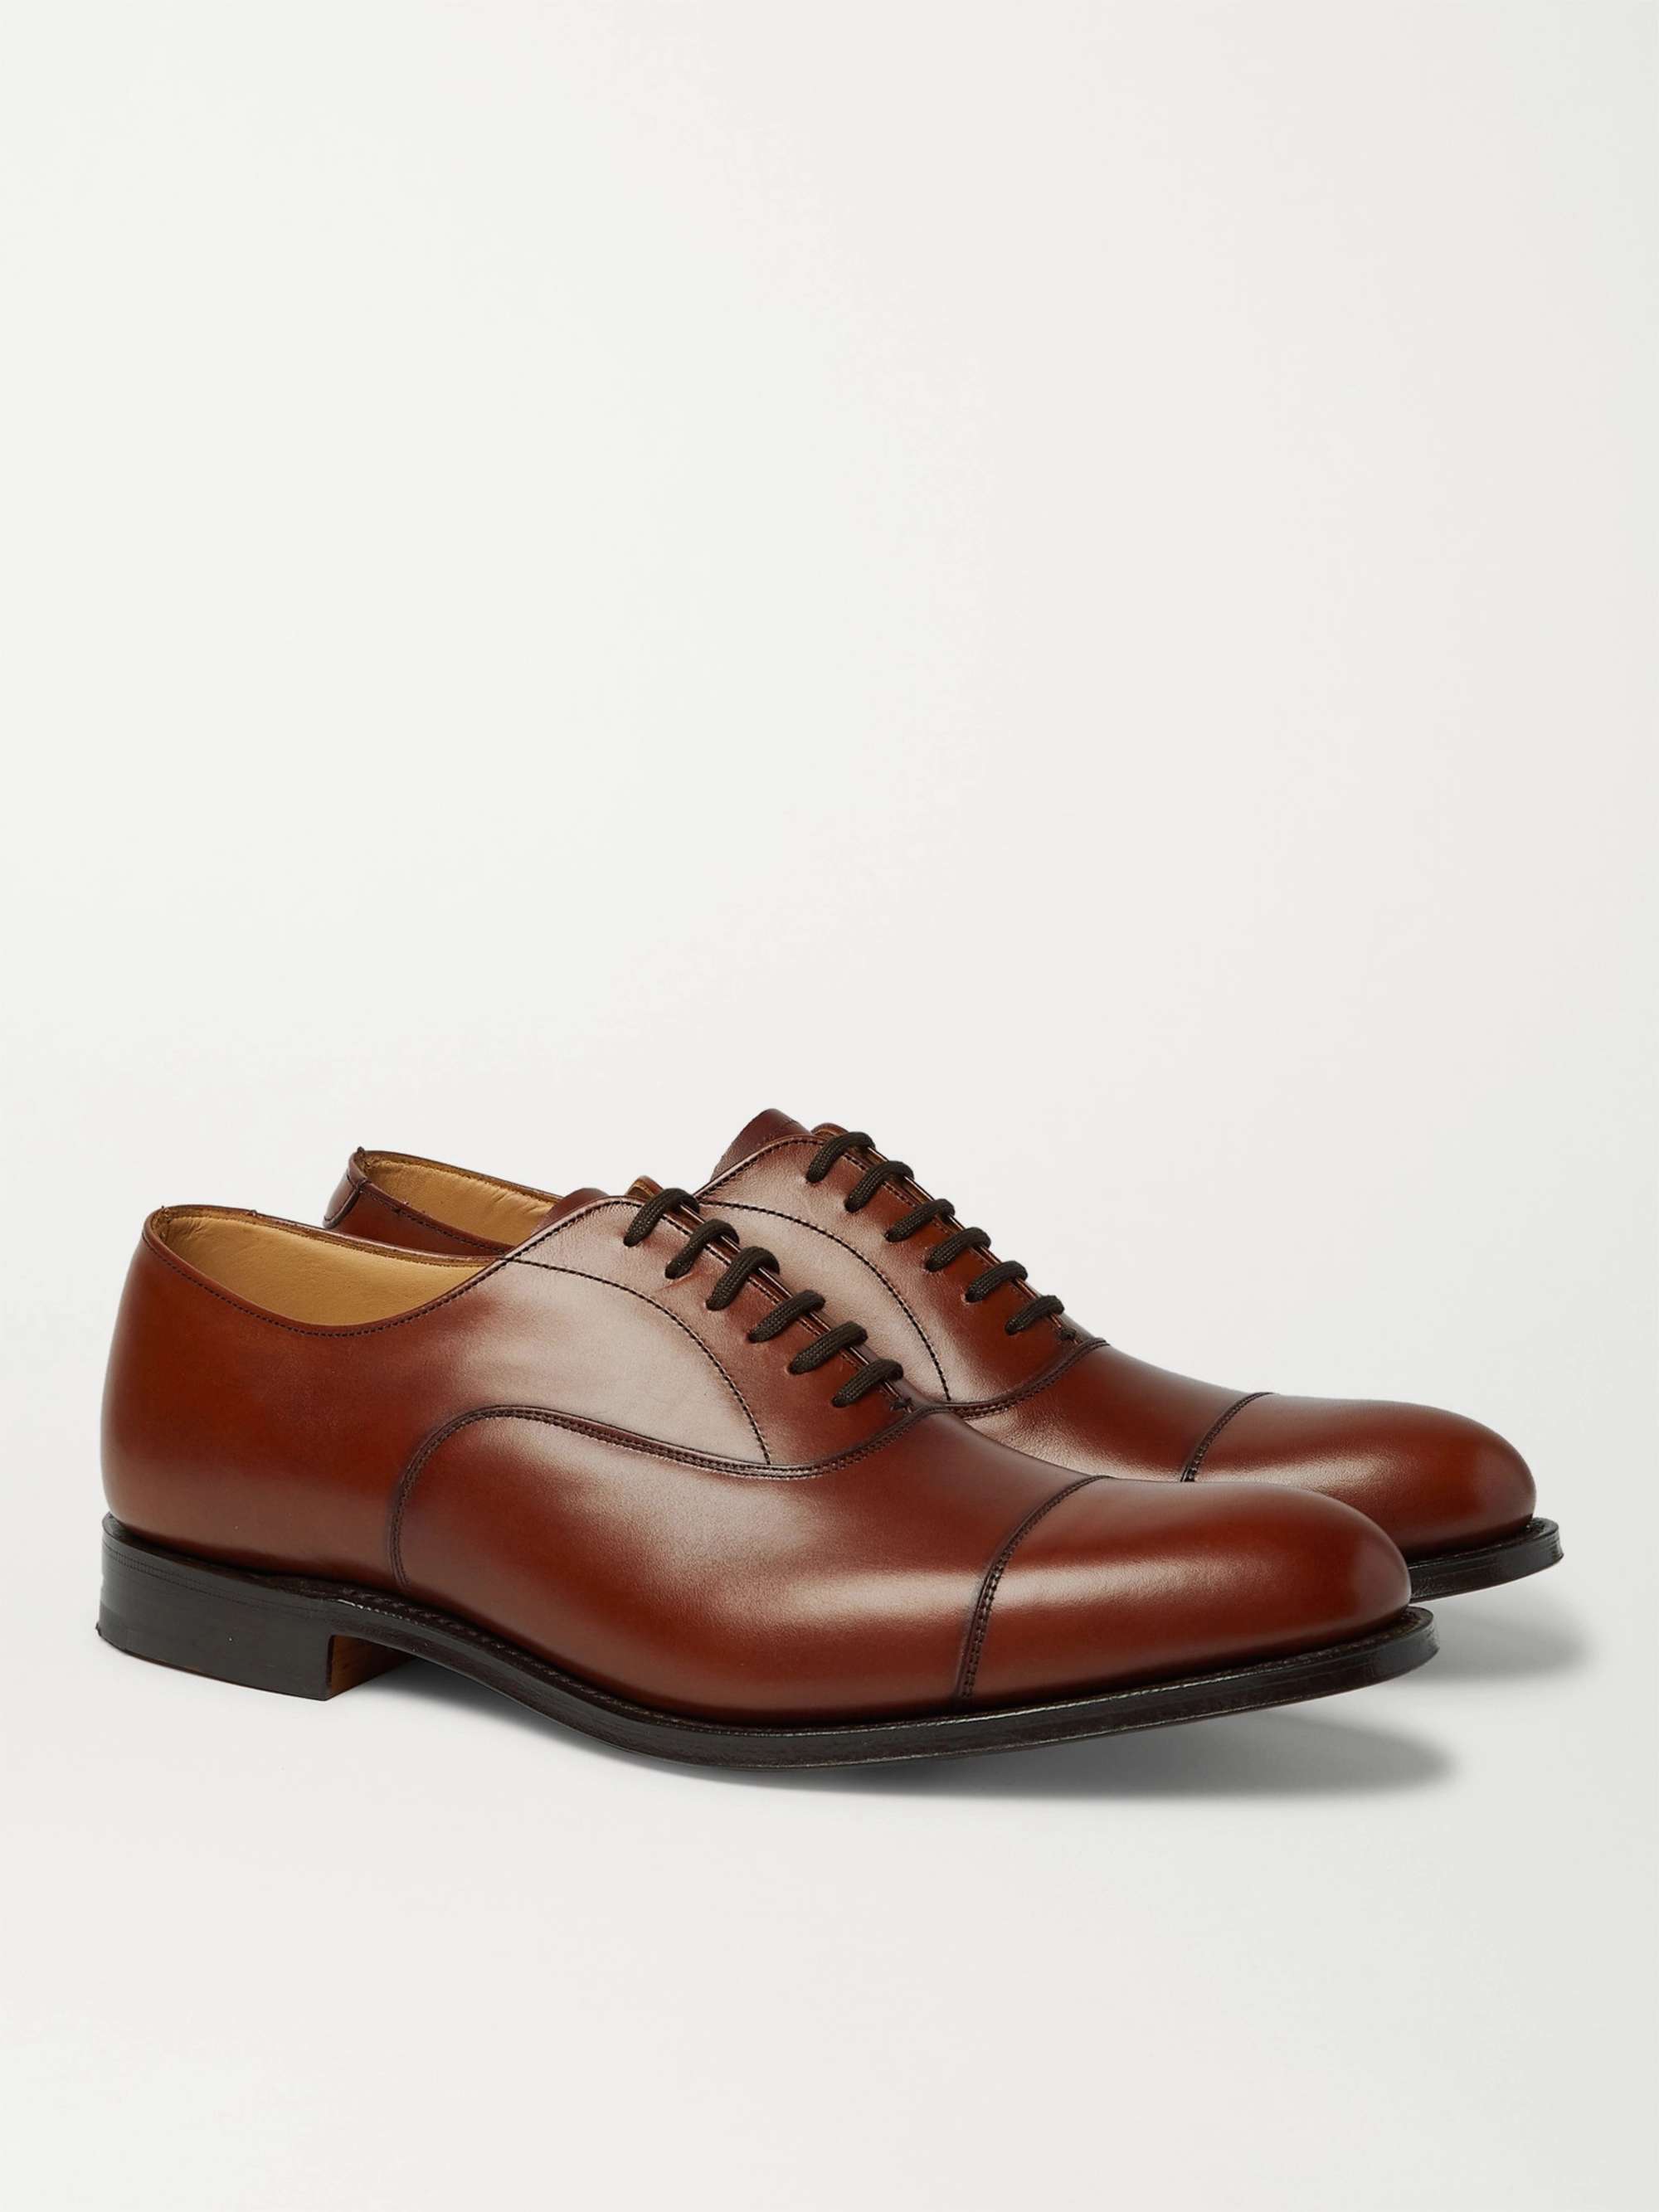 CHURCH'S Dubai Polished-Leather Oxford Shoes for Men | MR PORTER